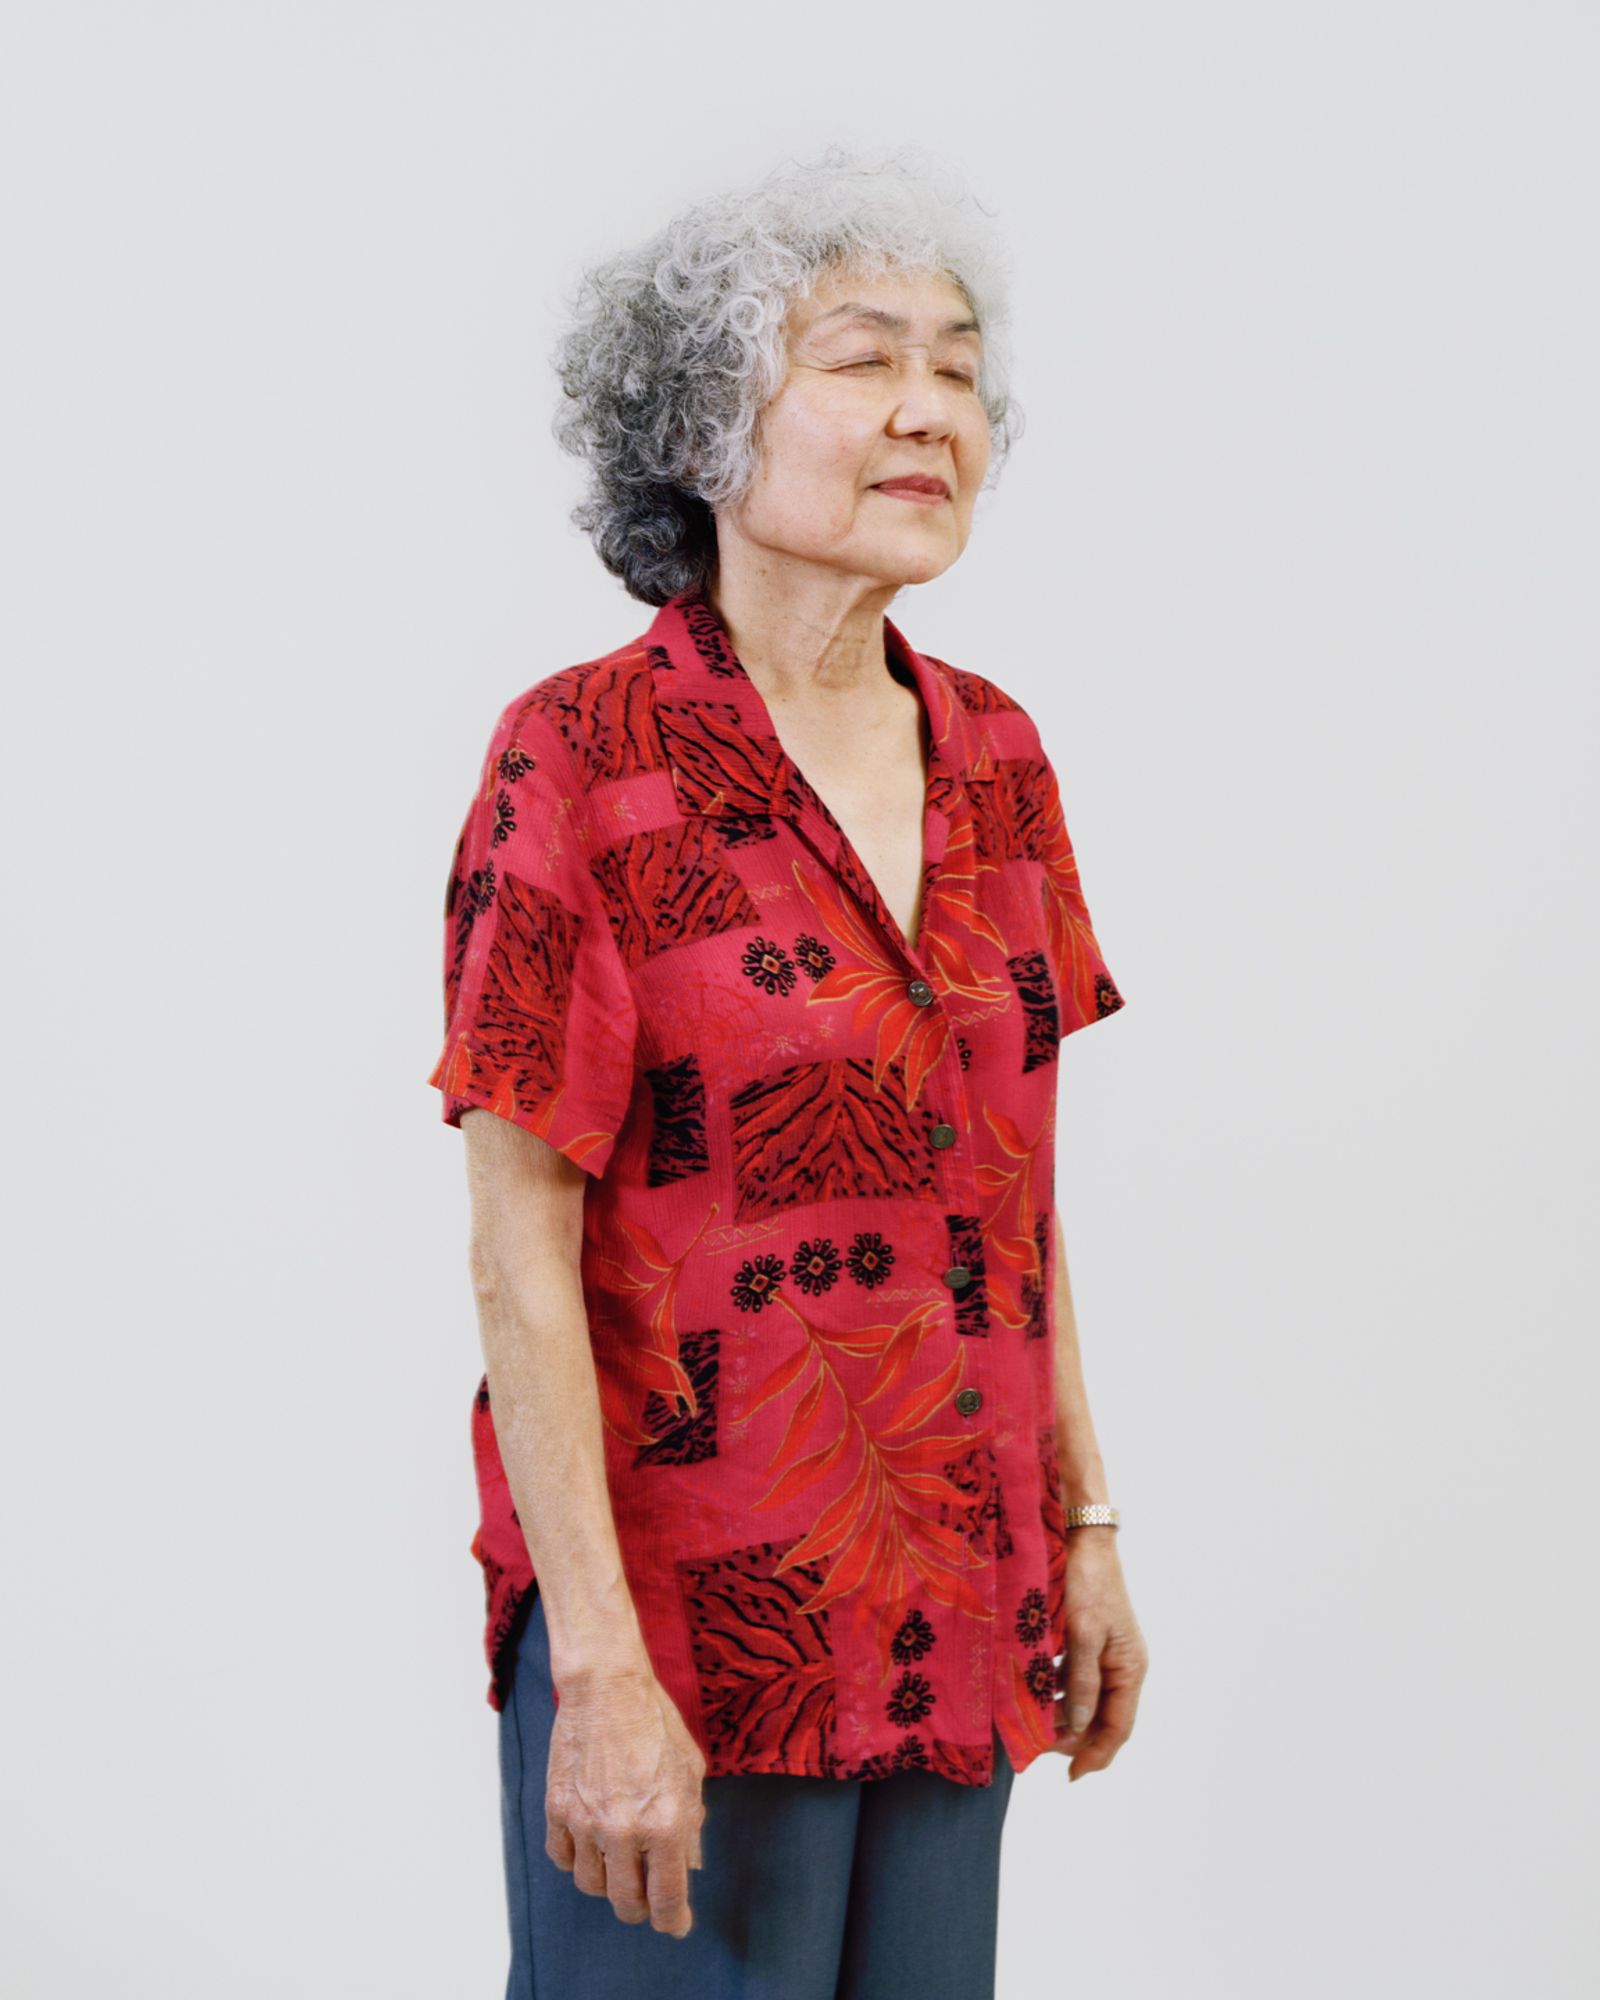 © Benjamin Rasmussen - Jane Okubo was born in the Amache Internment Camp in 1944. Granada, Colorado